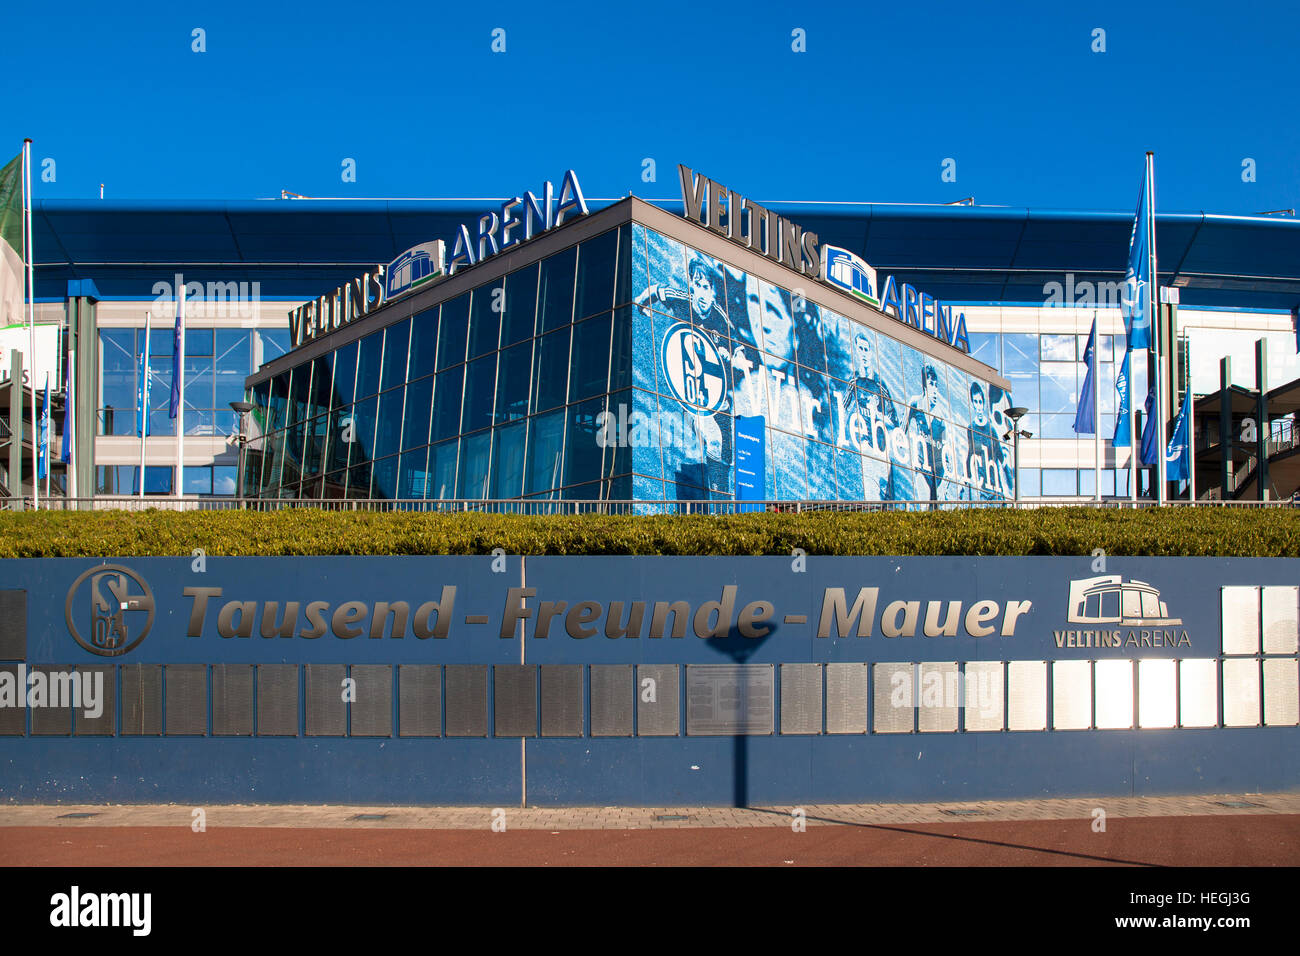 Germania, Gelsenkirchen, il Thousand-Friends-parete allo stadio di calcio Veltins-Arena Foto Stock